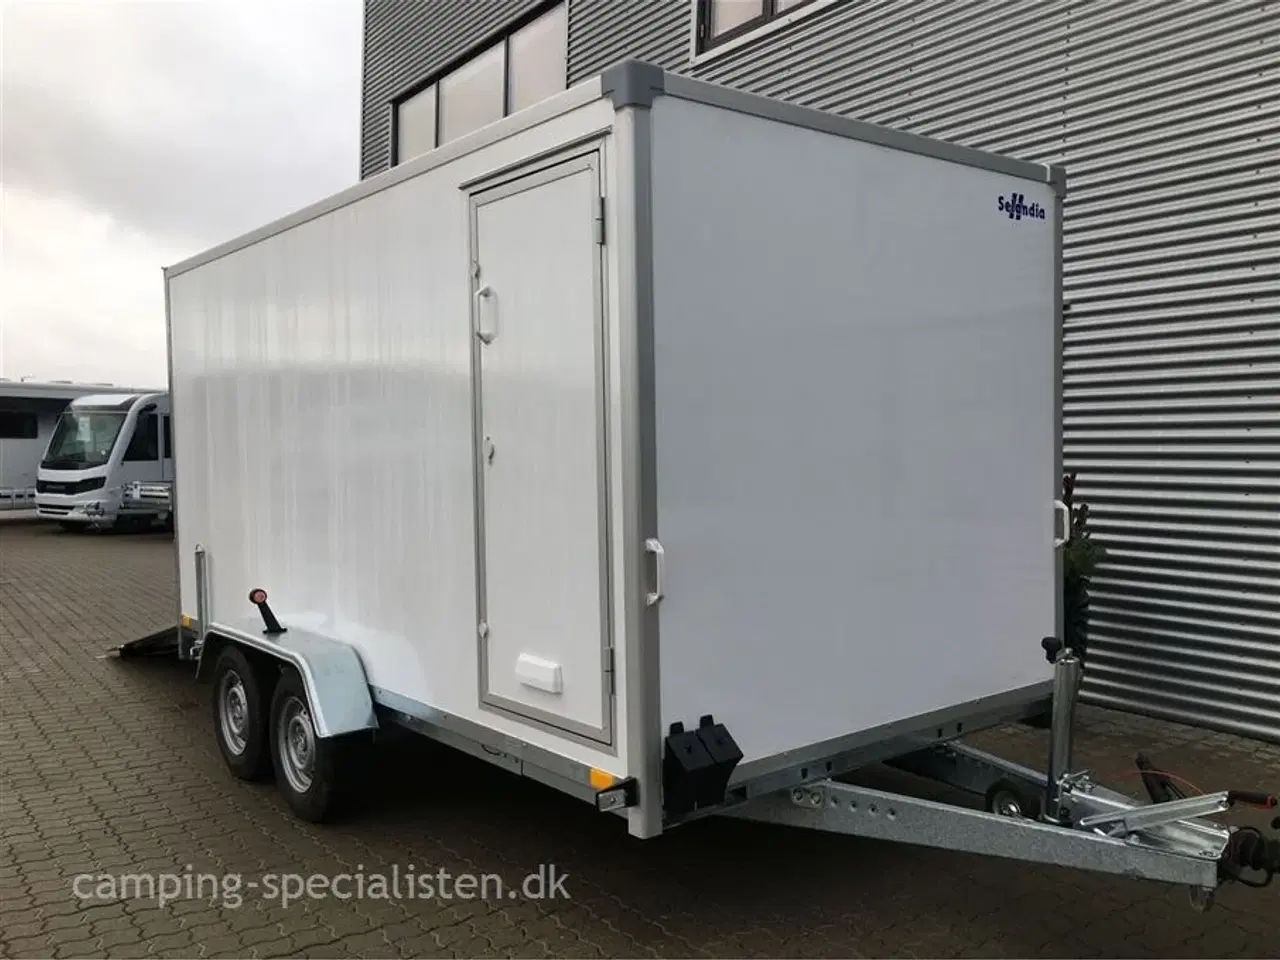 Billede 3 - 2024 - Selandia Cargotrailer Stor 2541 HT 2500 kg    Ny Cargo trailer 2*4 meter Model 2024  Camping-Specialisten.dk Silkeborg og Arhus